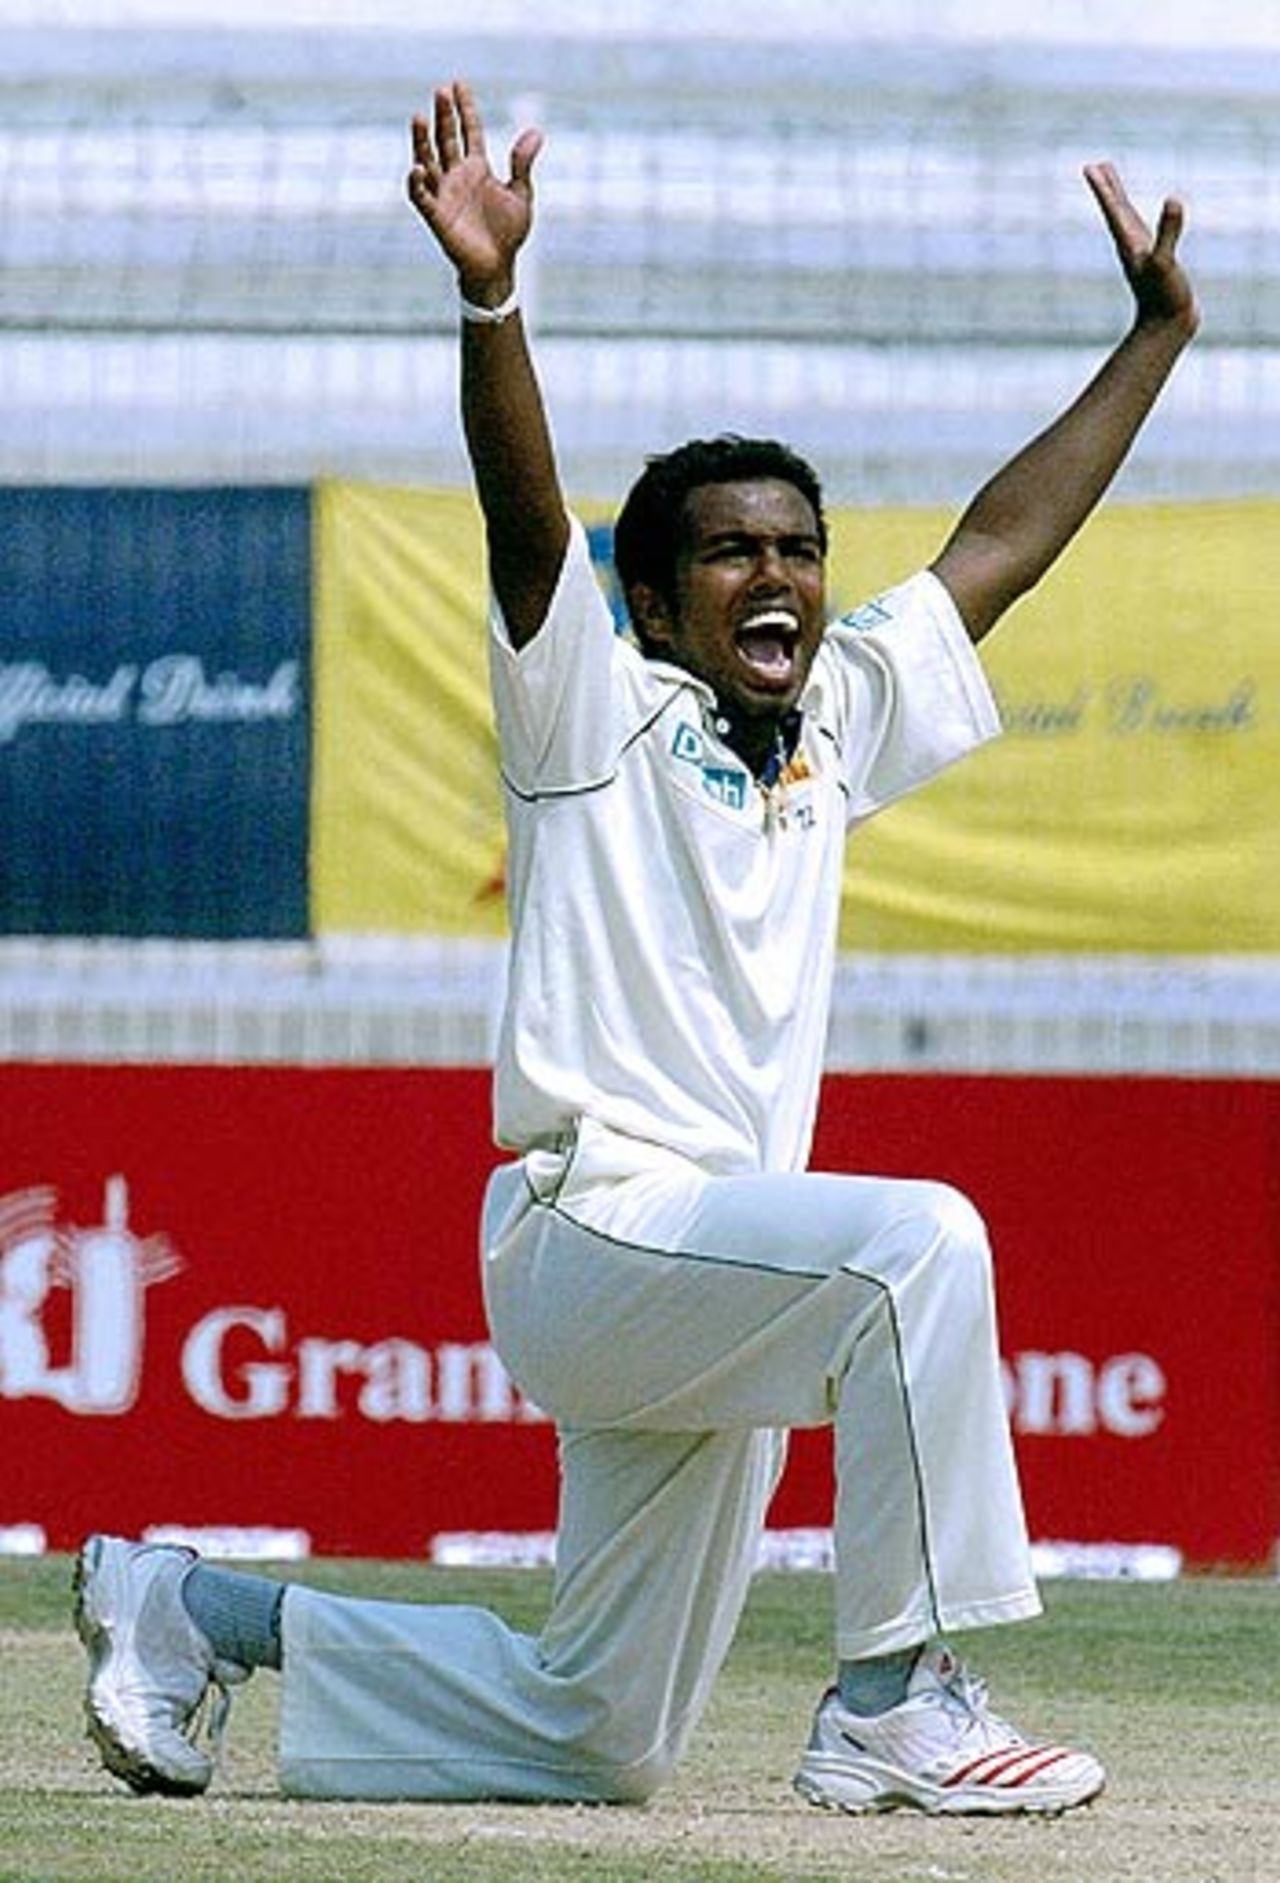 Malinga Bandara appeals in vain against Habibul Bashar, Bangladesh v Sri Lanka, 2nd Test, Bogra, March 8, 2006